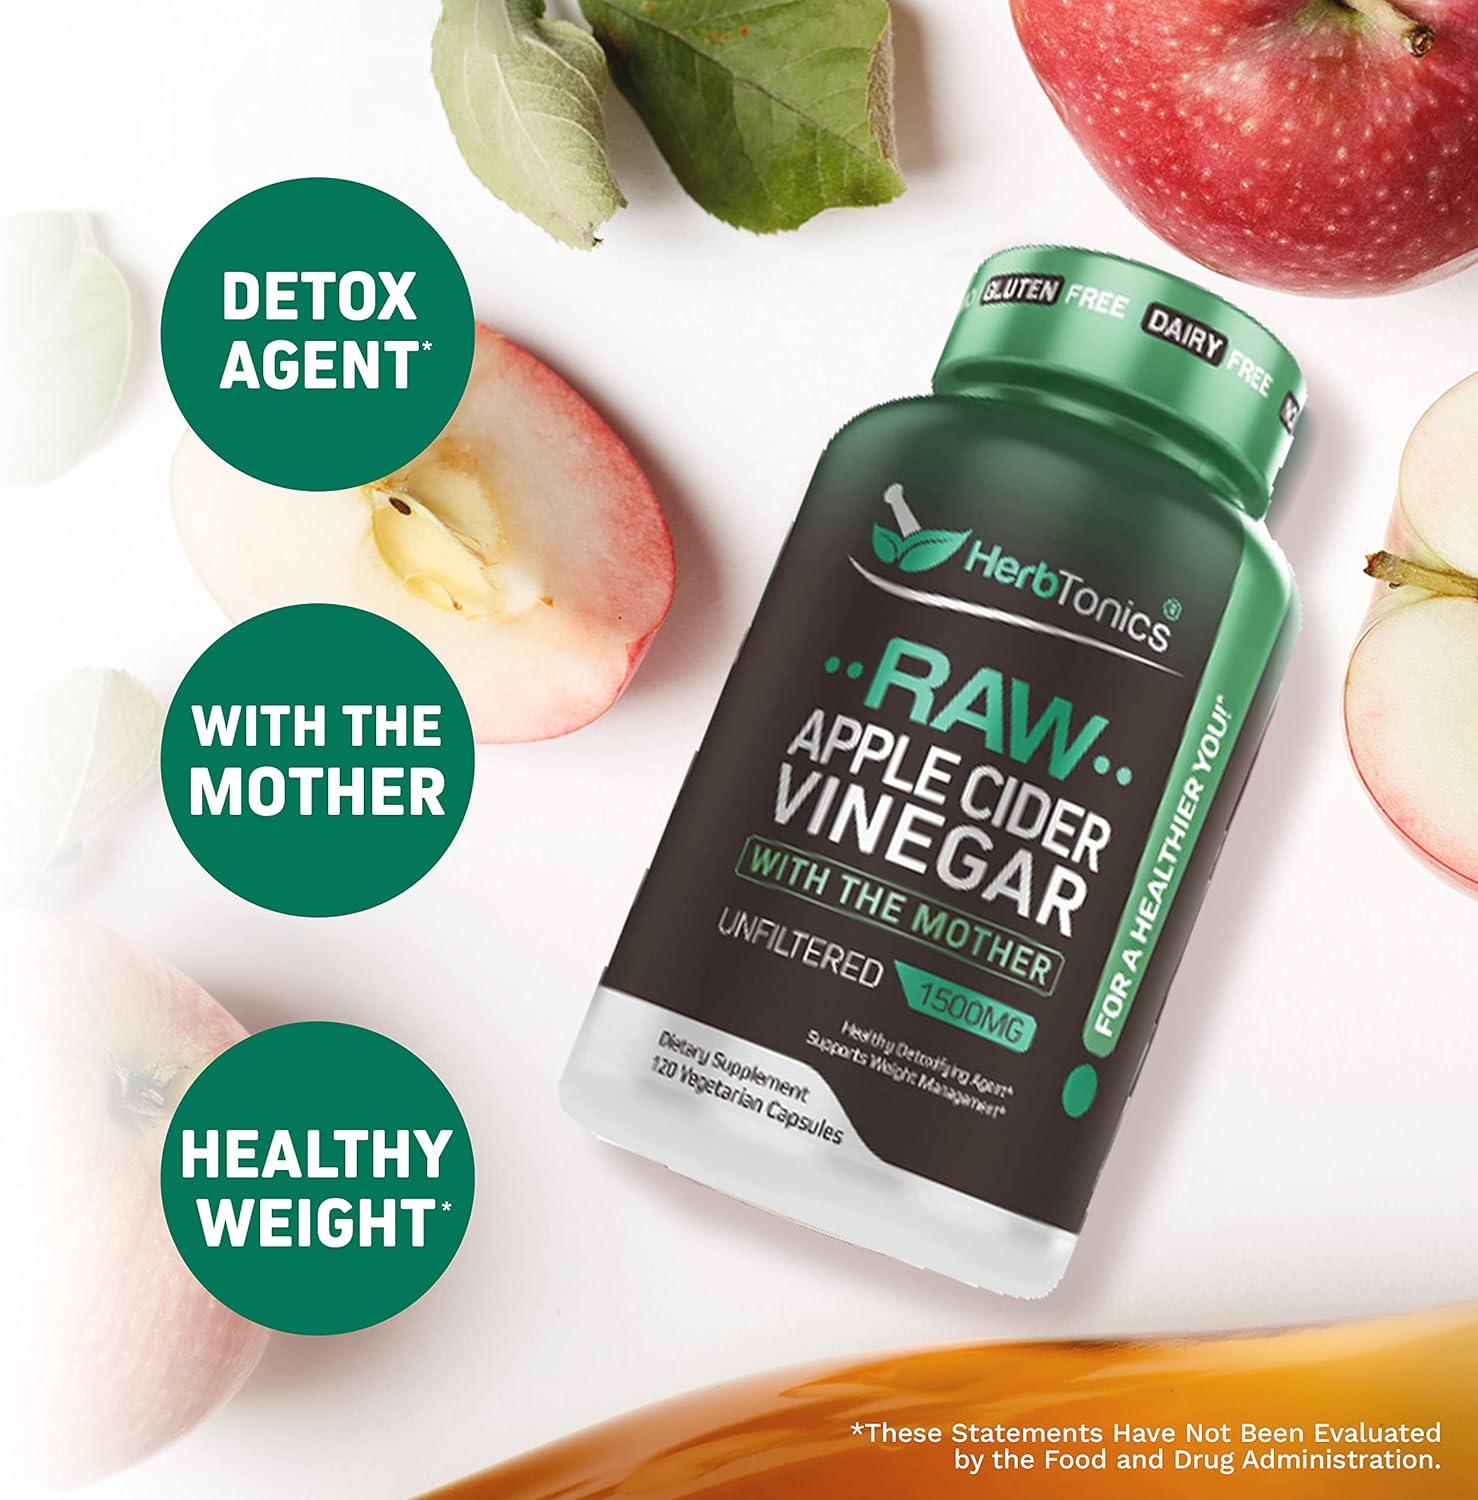 Herbtonics Raw Apple Cider Vinegar Capsules, 1500mg Detox Support (Packaging May Vary), 120 Caps : Health & Household